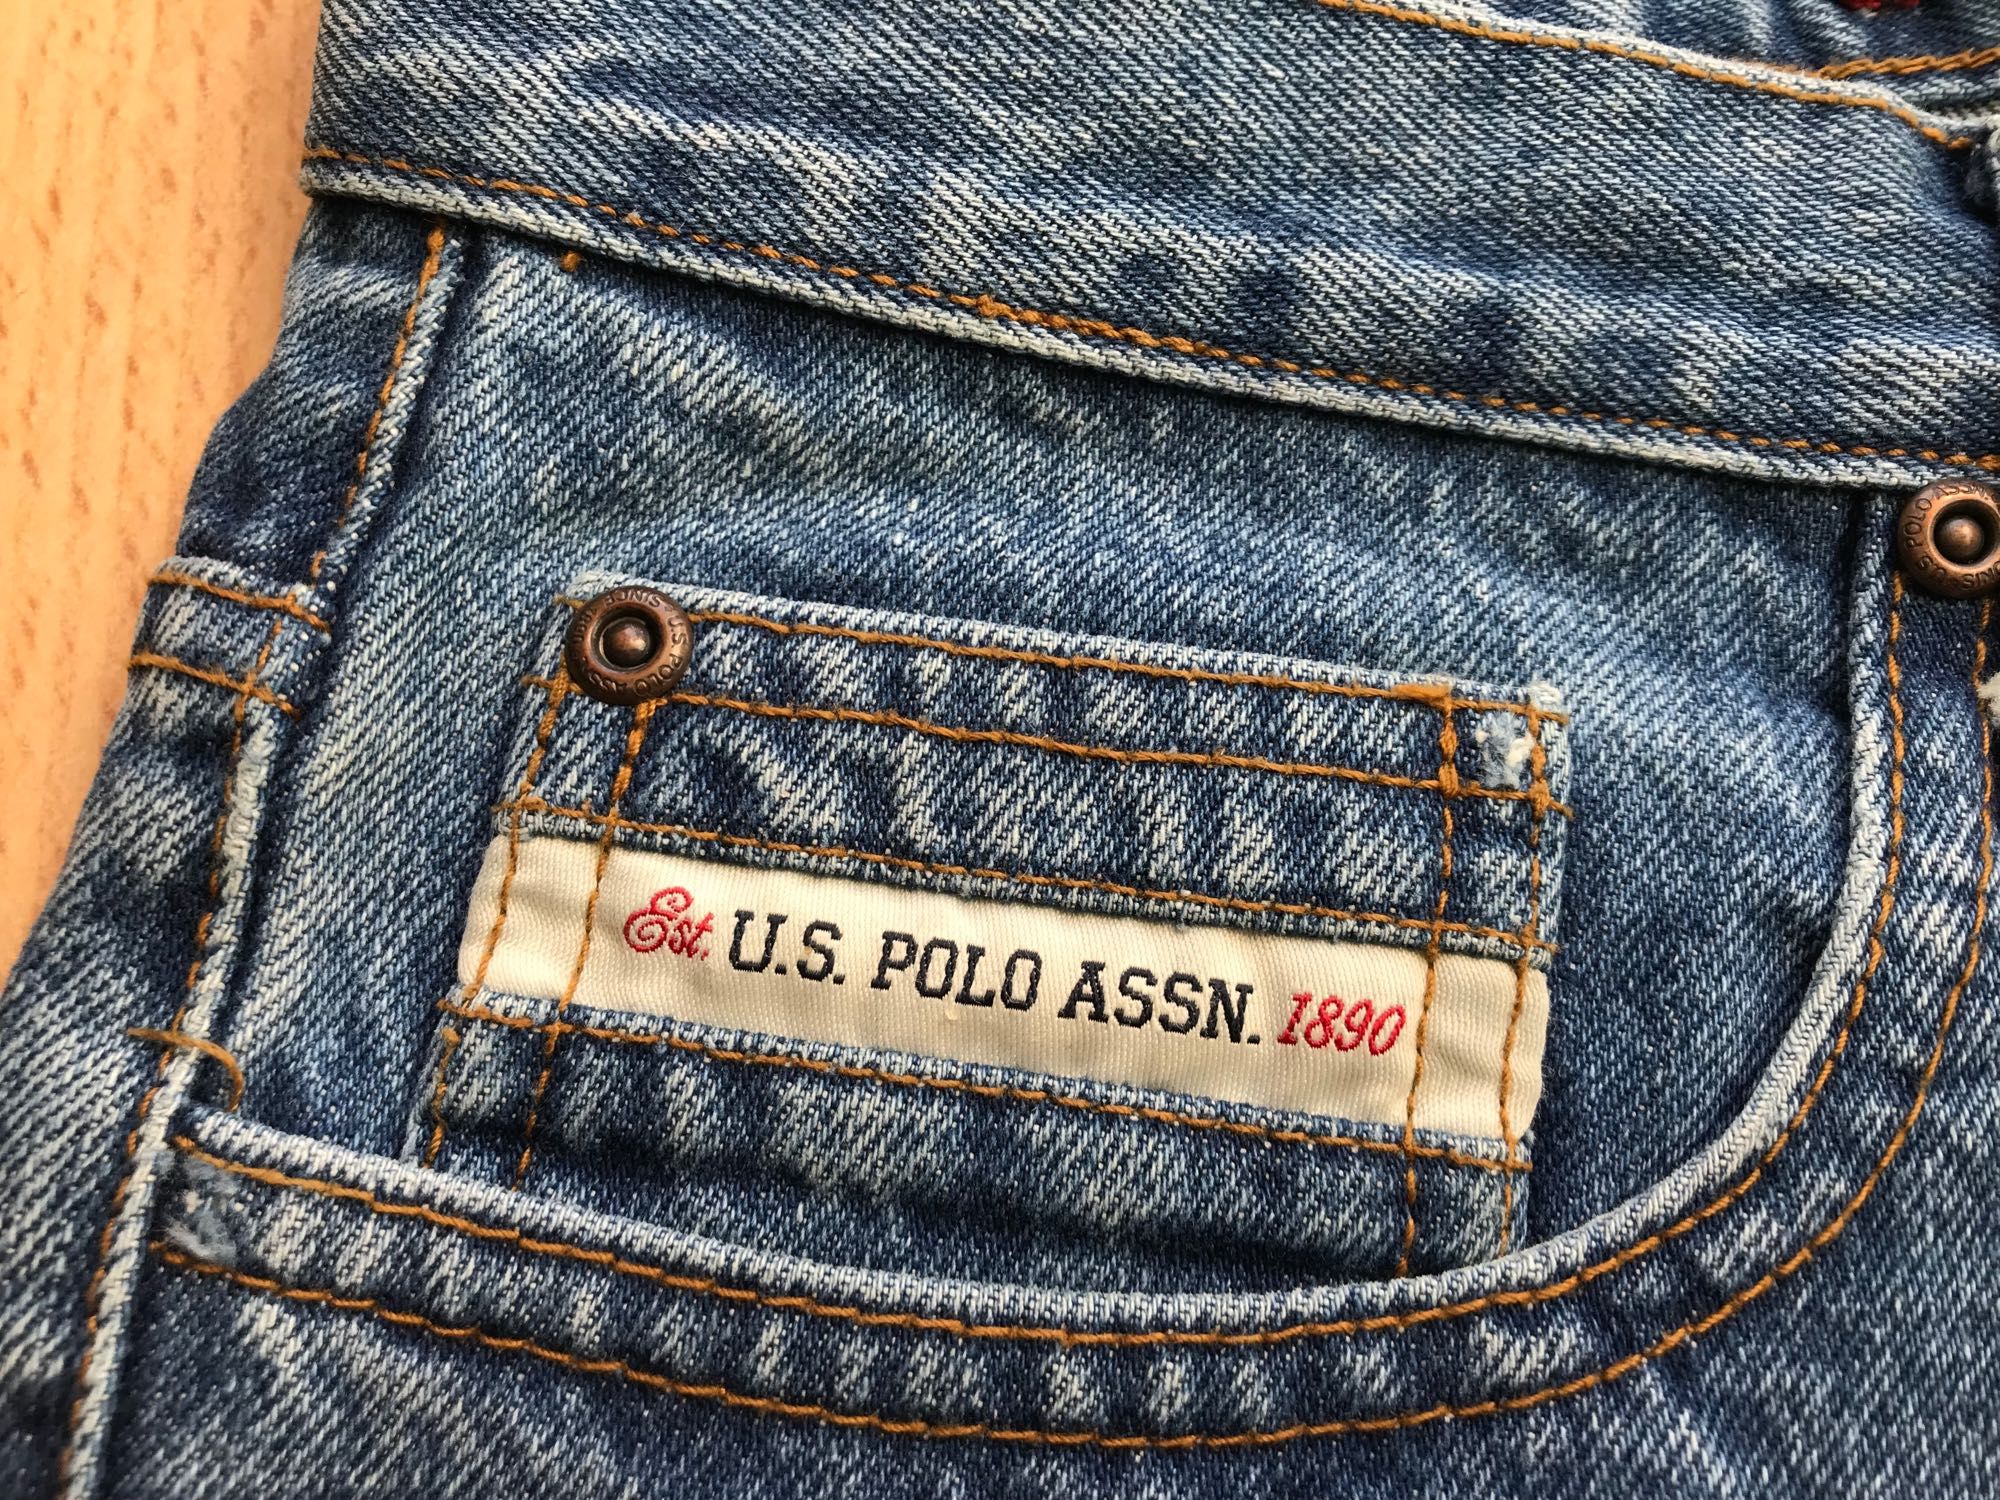 Spodnie marki U.S. POLO ASSN    16